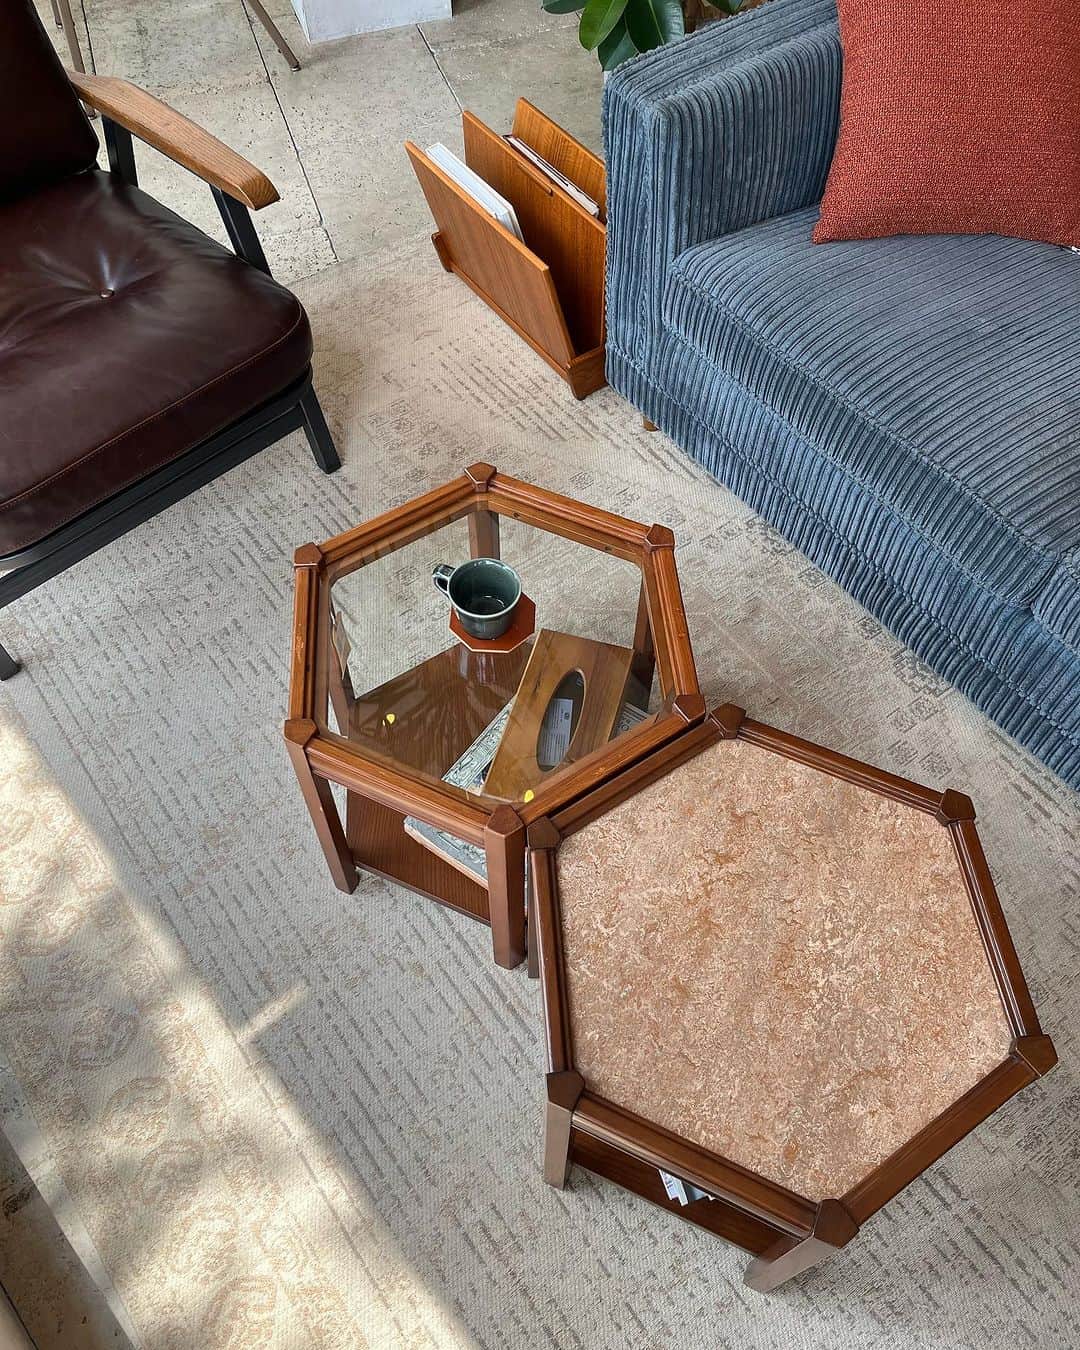 ACME Furnitureのインスタグラム：「original PRODUCTS   ▪️BROOKS HEXAGON TABLE   ヴィンテージのサイドテーブルからのインスピレーションを元に製作しました。自由に組み合わせてコーヒーテーブルやサイドテーブルにお使いいただけます。  ---  ACME Furniture 創立40周年を記念して、先着40名様に対象ソファ及び20万円以上のお買い物で、ヴィンテージ家具のアーカイブブック「The American Vintage Furniture」通称ACME BOOKをプレゼント！  ※無くなり次第終了となります。 ※こちらはACME Furniture 目黒通り店限定企画となります。 ※Baycrews Storeでも一部ソファが対象です。  Contact:ACME Furniture MEGURO St. TEL:03-5720-1071 Email:acme-jsf@acme.co.jp」